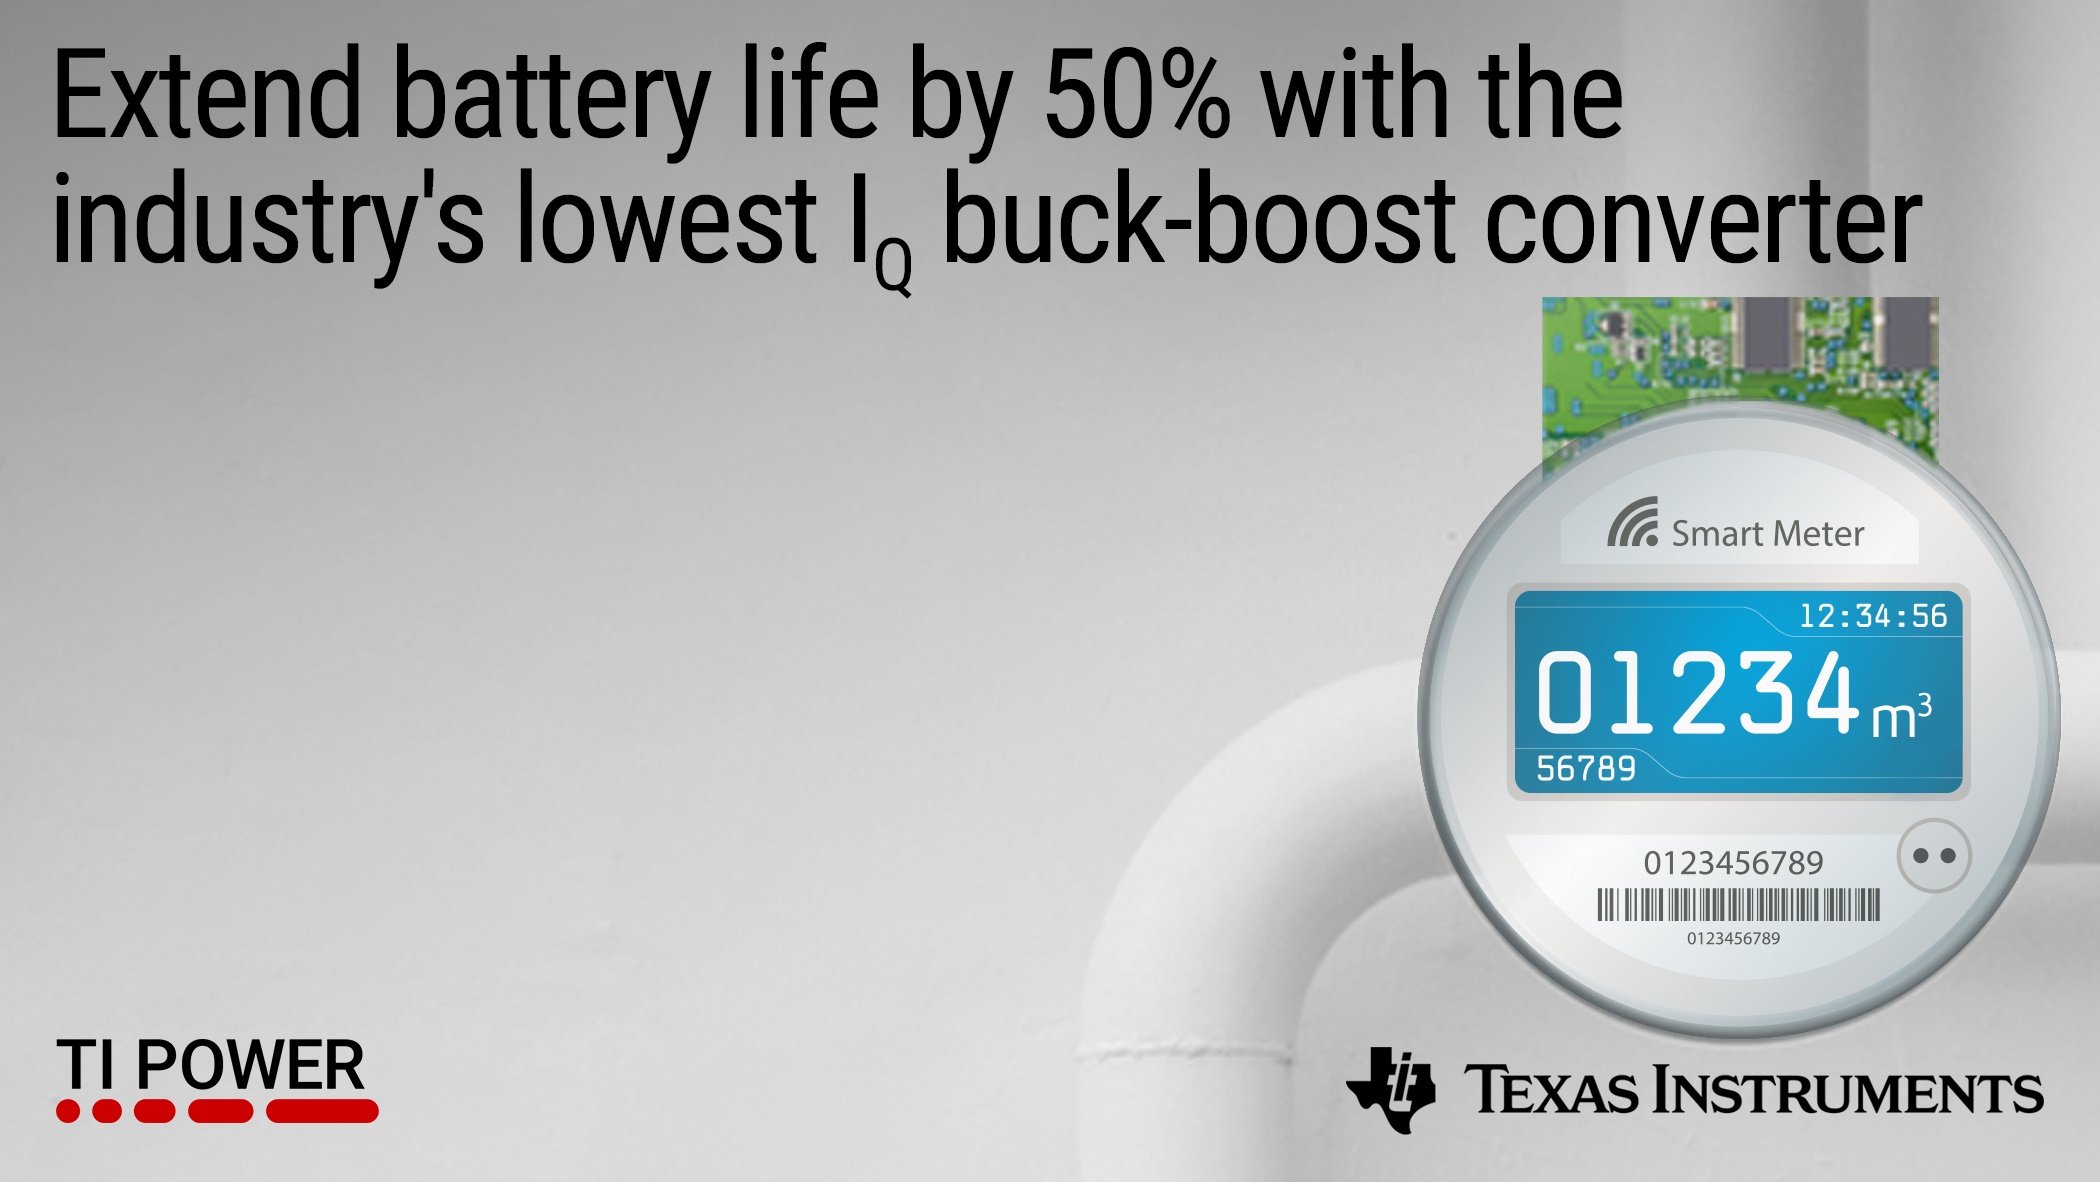 DC/DC Buck-Boost Converter Extends Battery Life by 50%